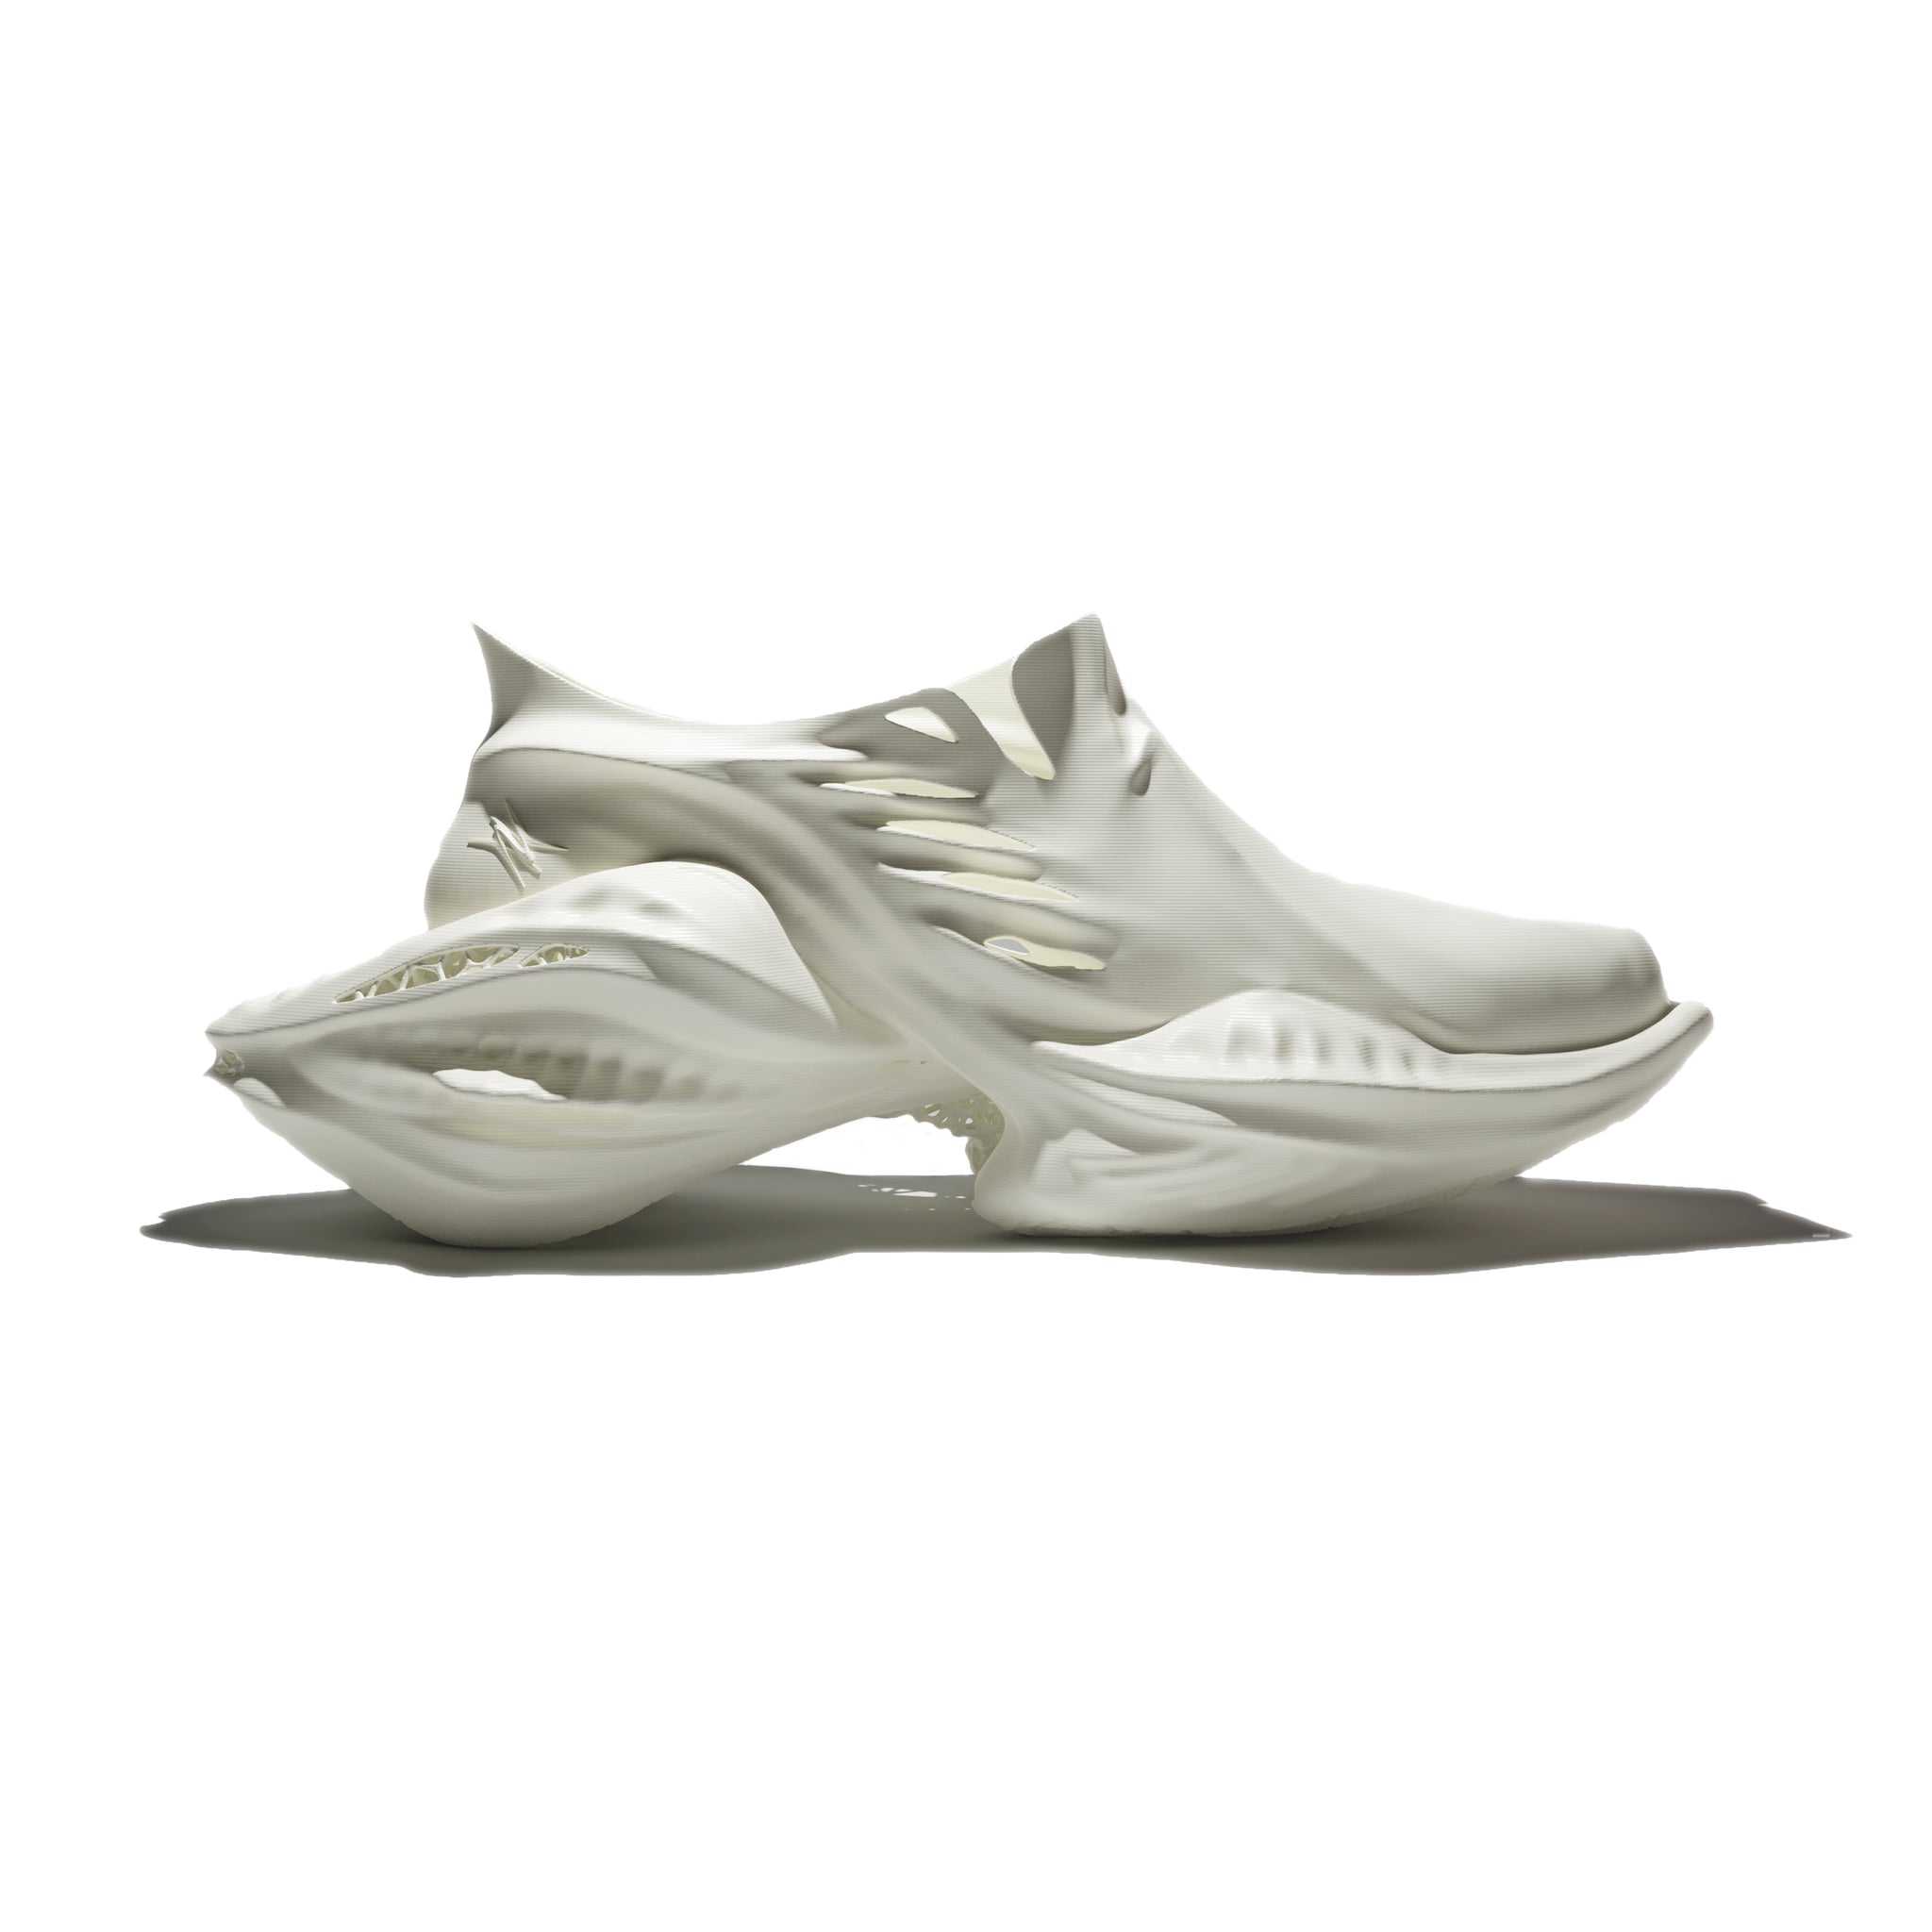 ALIENANT X DERO ASSORTMENT Hyer S White 3D Printed Shoes